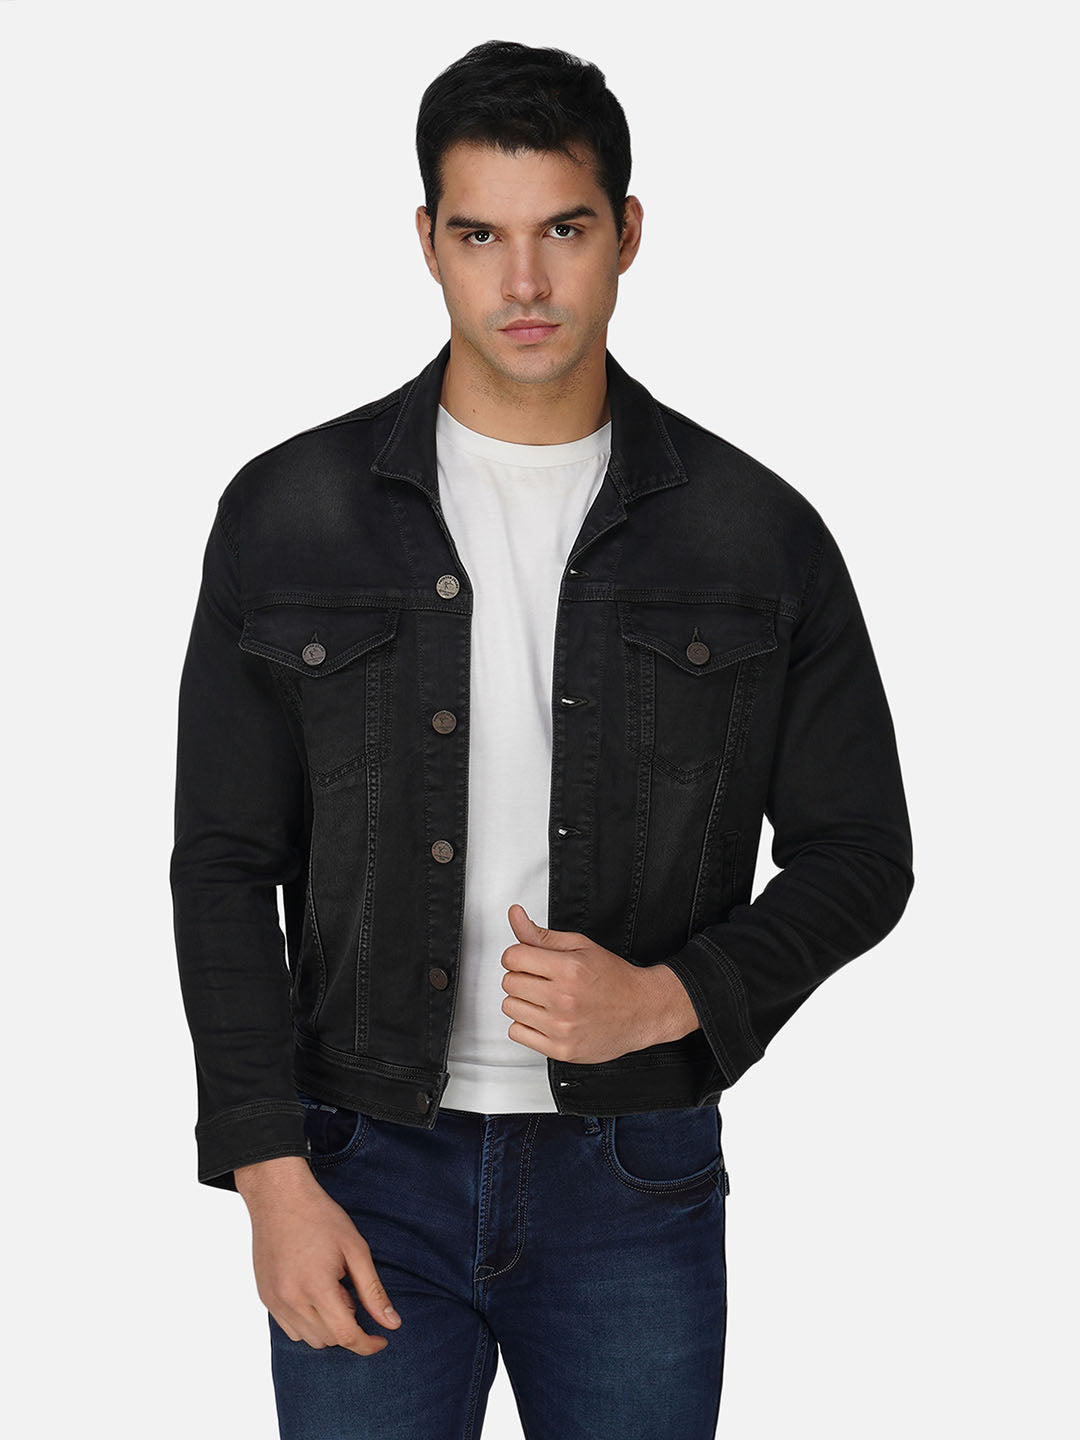 WALLDOR Denim Jackets for Men Rugged Wear Cowboy Cut Western Jean Jacket  Casual Slim Fit Button Lapel Denim Jacket Outwear at Amazon Men's Clothing  store